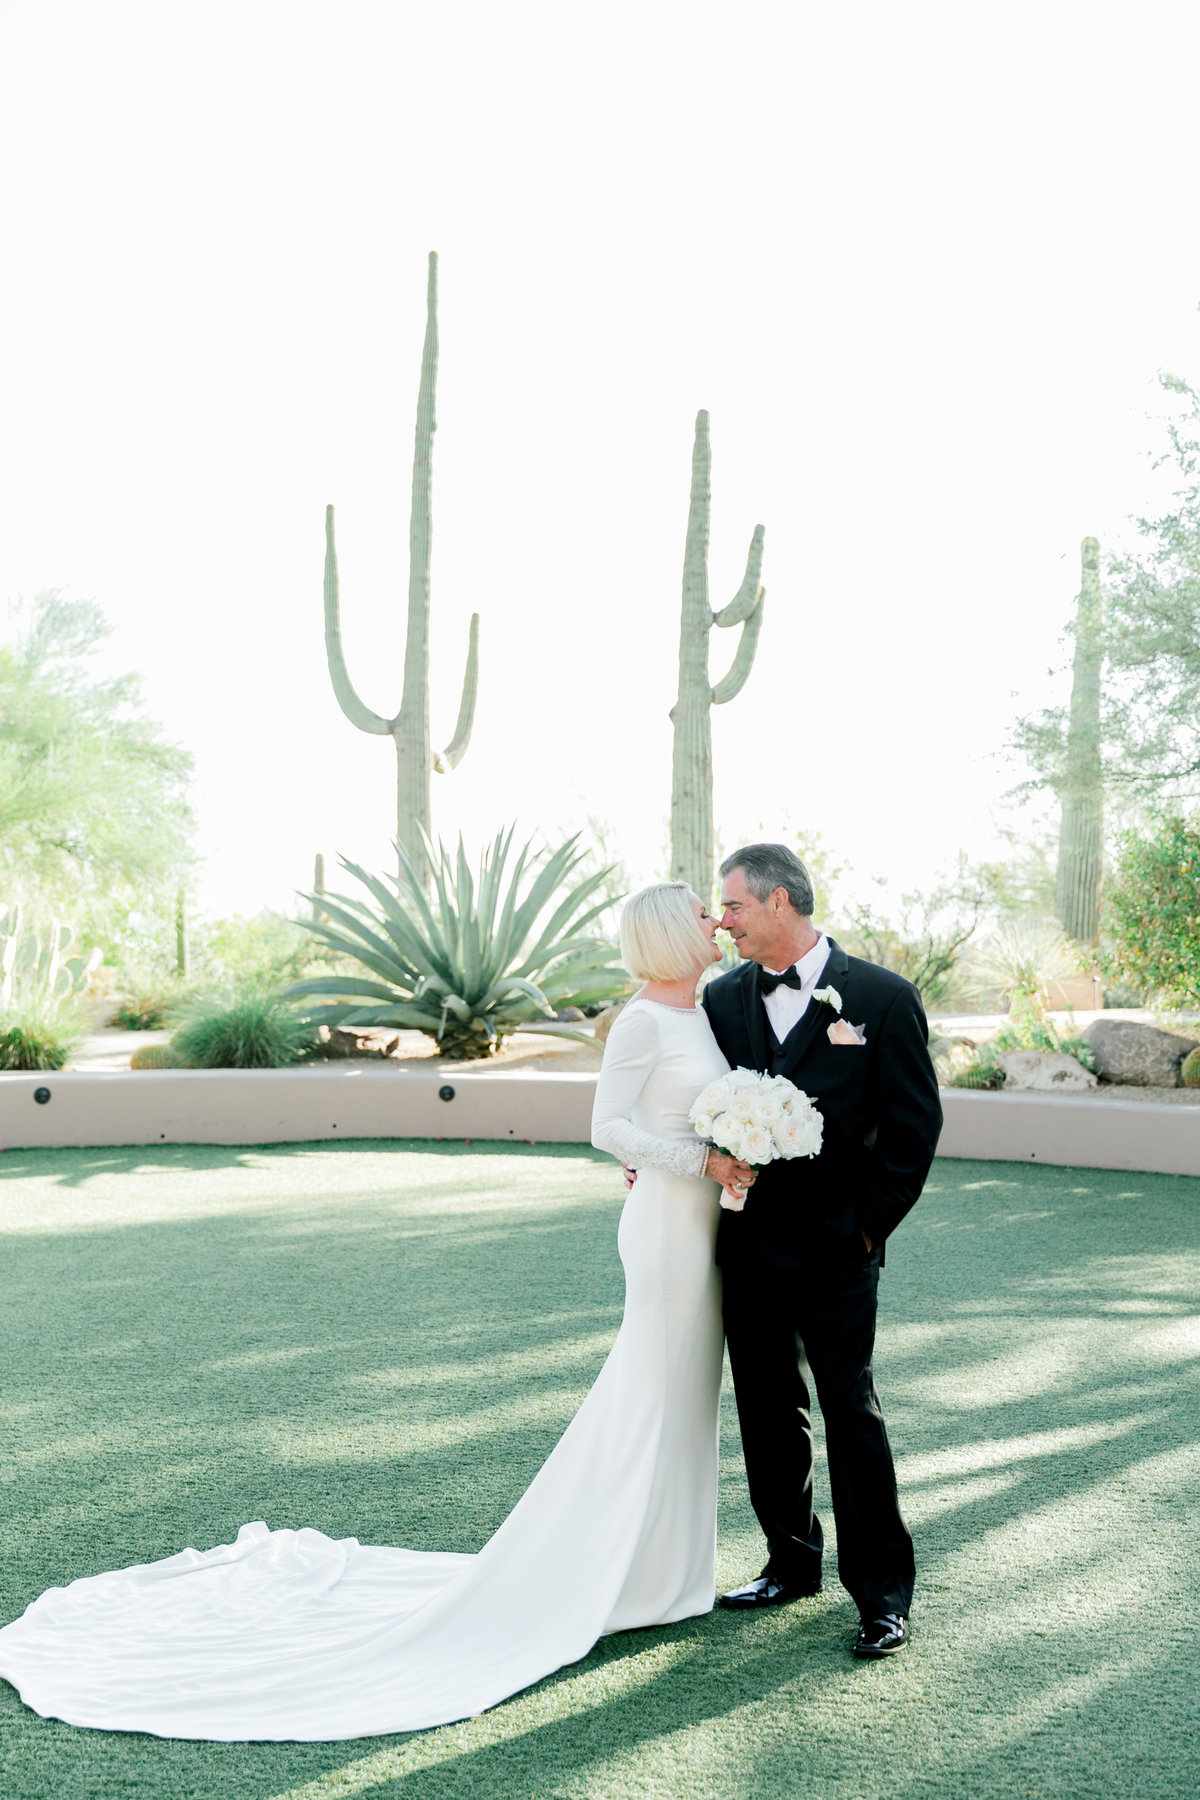 Karlie Colleen Photography - Four Seasons Scottsdale Arizona Wedding - Camille & Jim -191